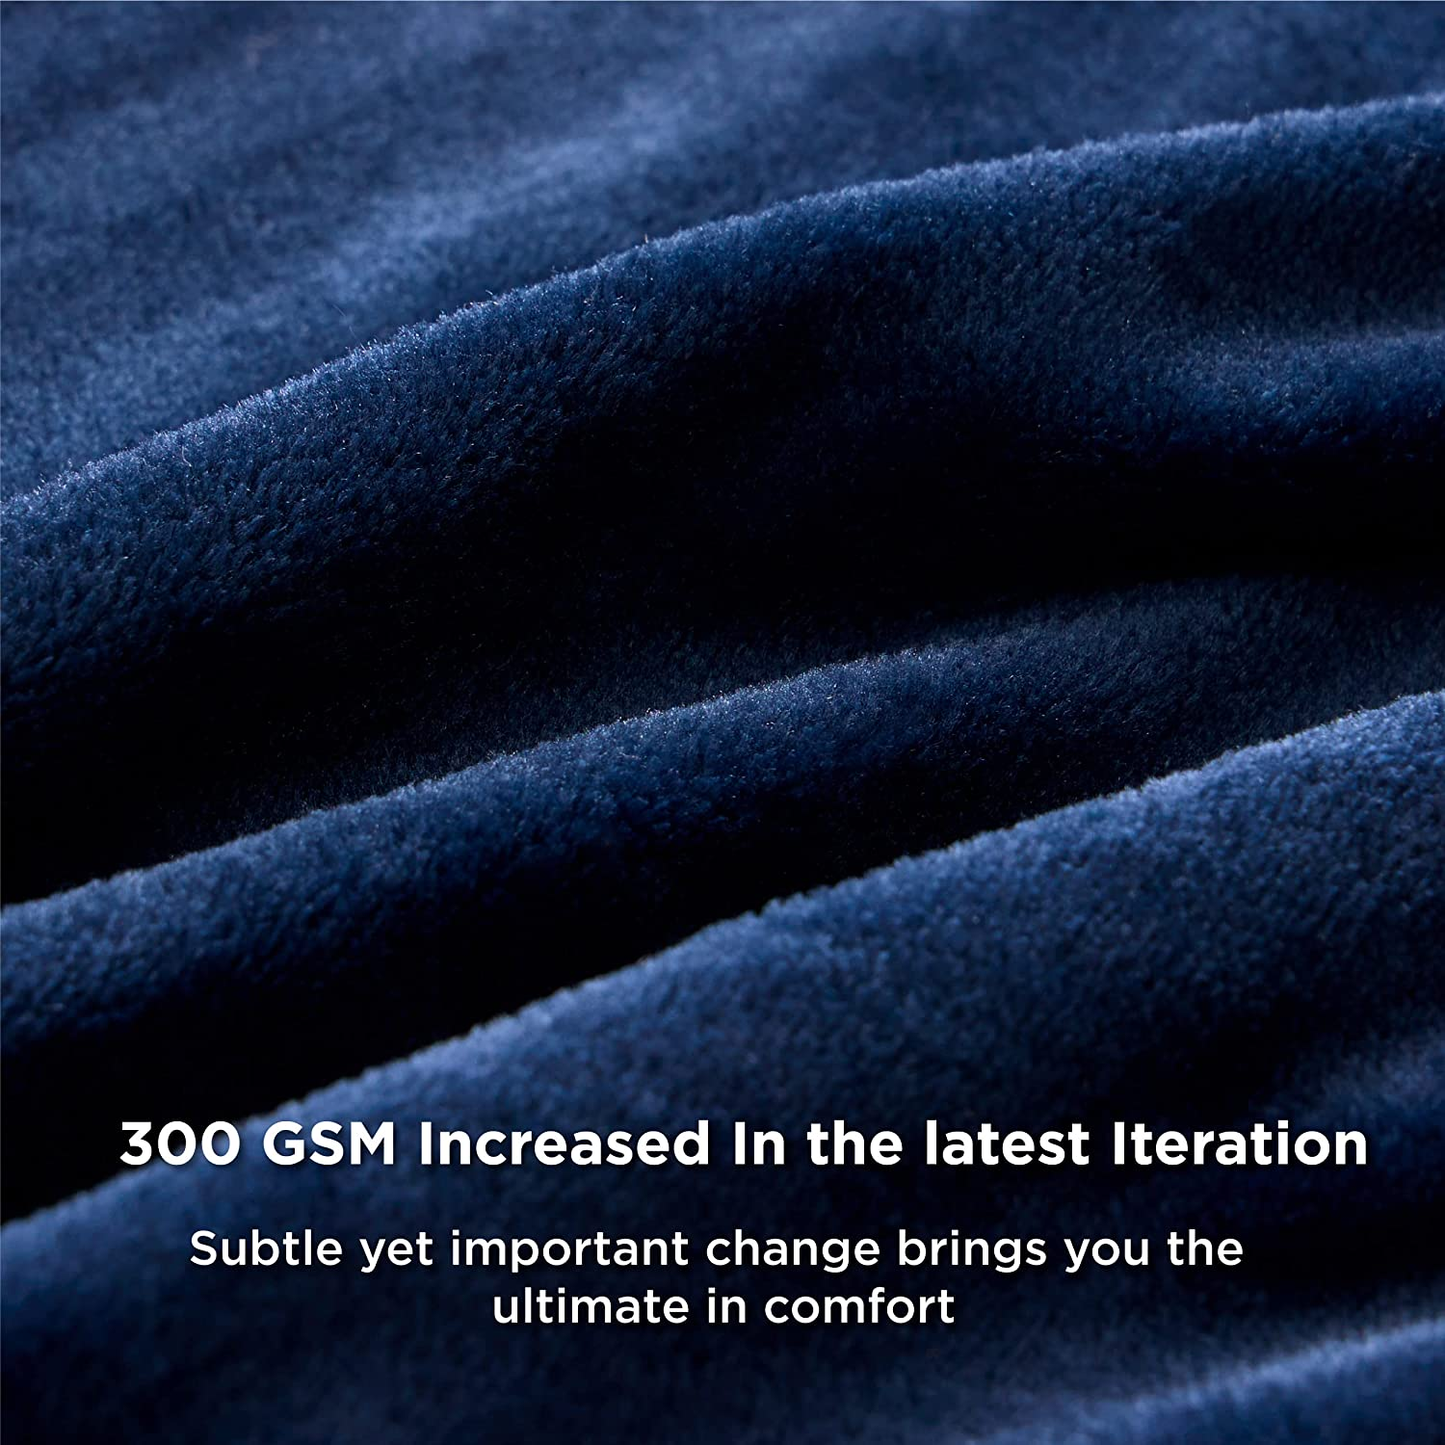  Fleece Blanket Throw Blanket - Dark Blue Lightweight Blanket for Sofa, Couch, Bed, Camping, Travel - Super Soft Cozy Microfiber Blanket